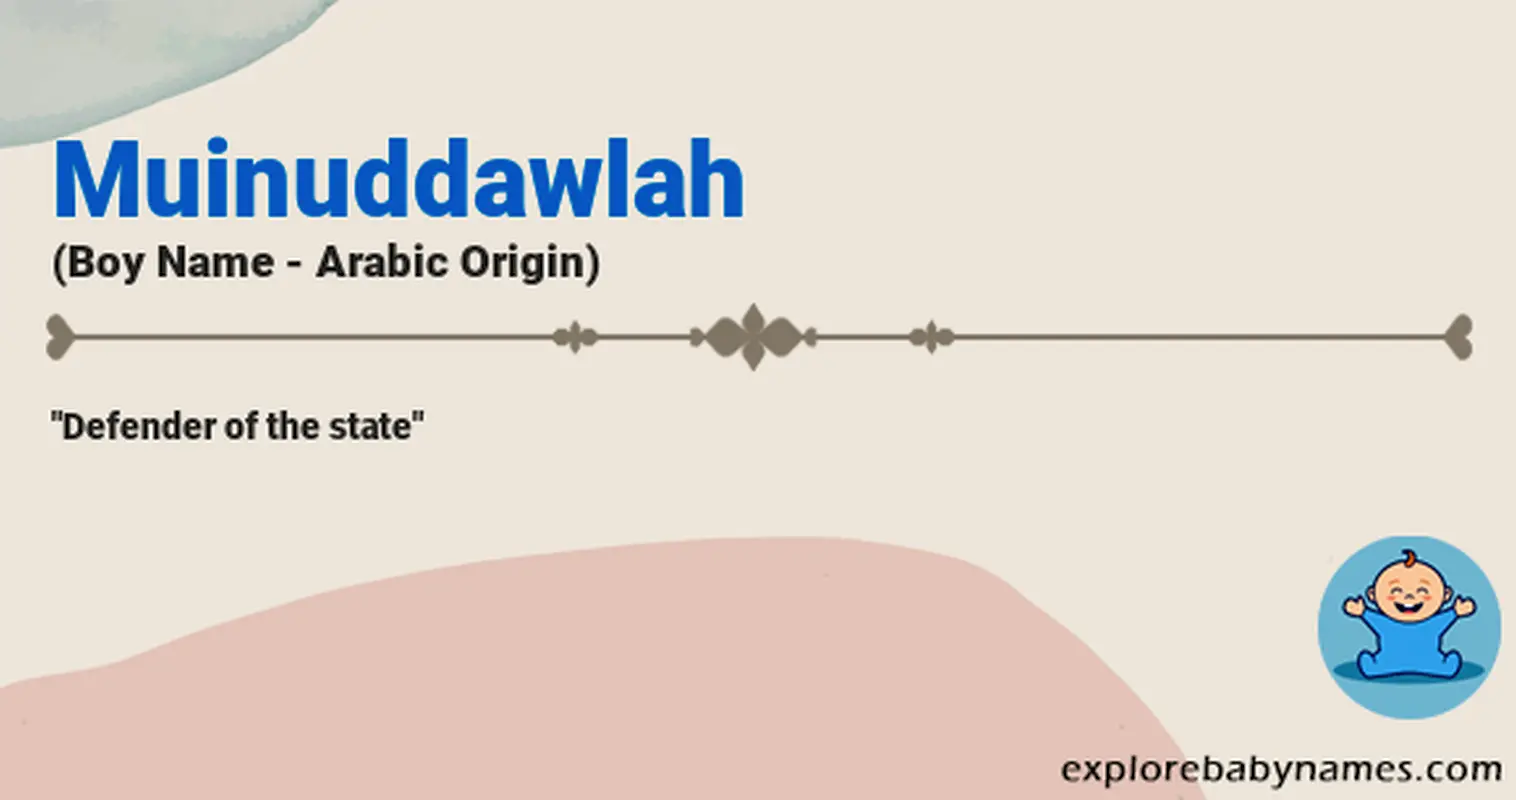 Meaning of Muinuddawlah